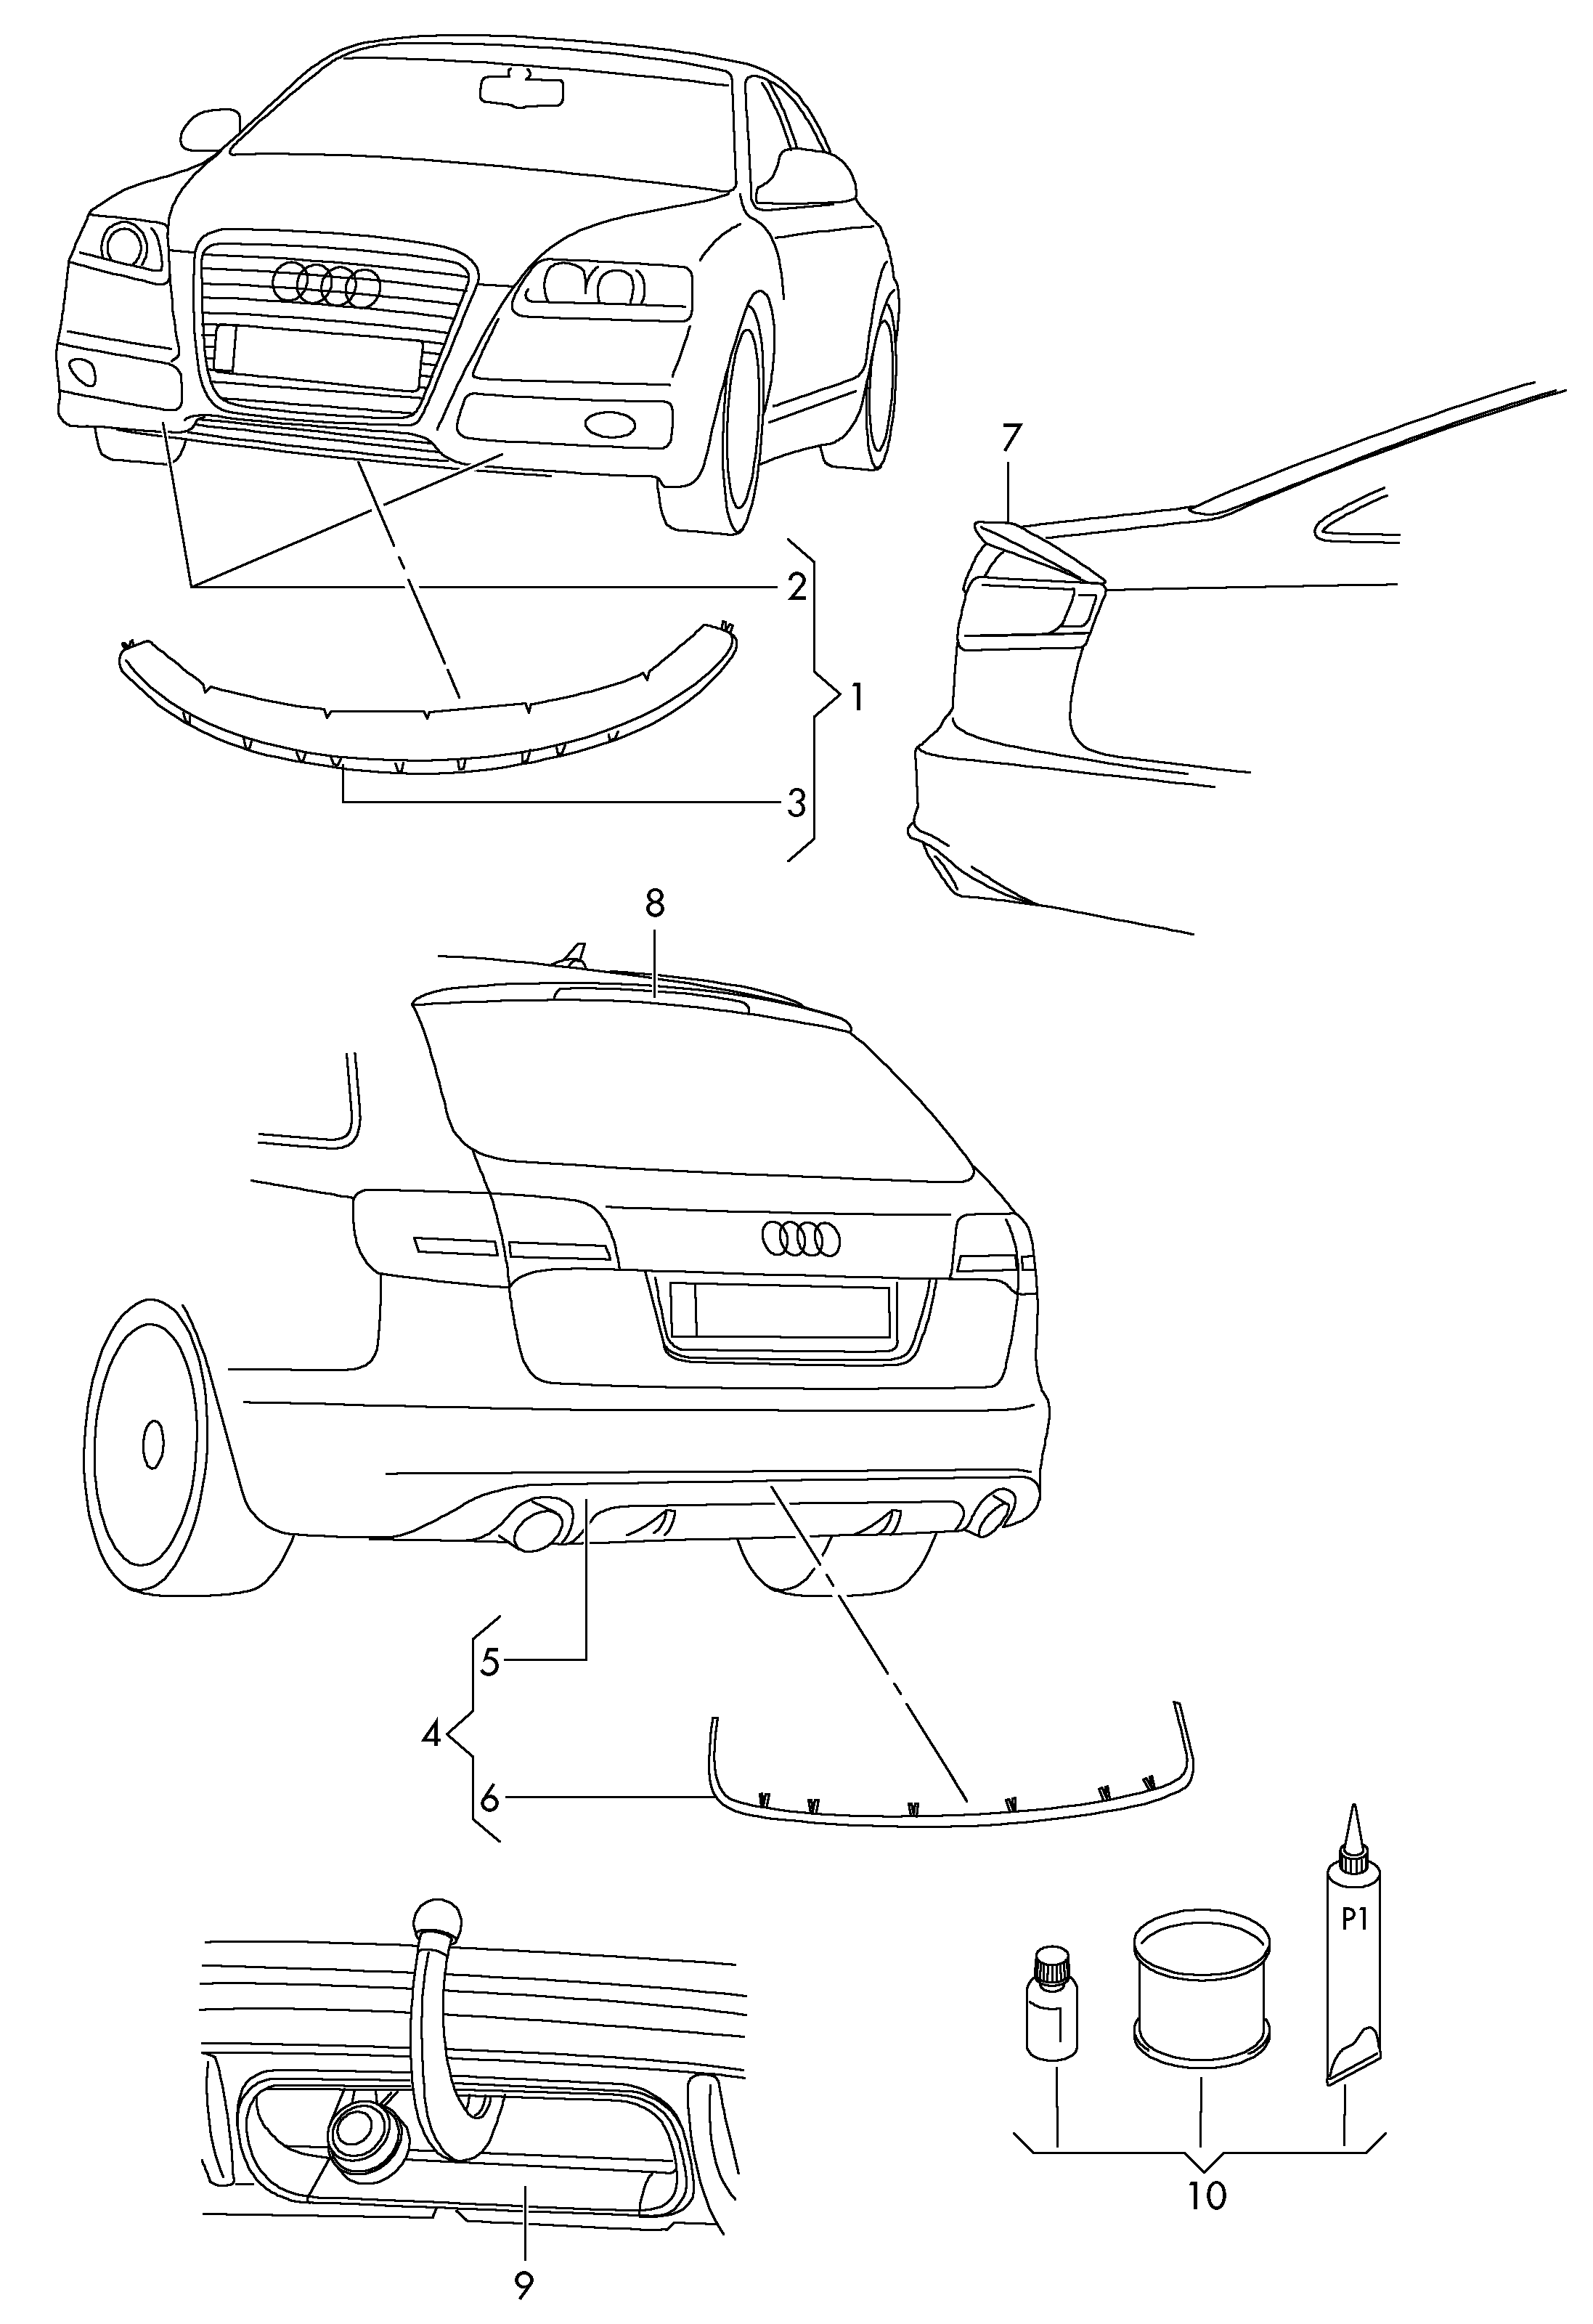 Original Zubehoer; Klebesatz fuer Aerodynamik- An Audi A6/Avant